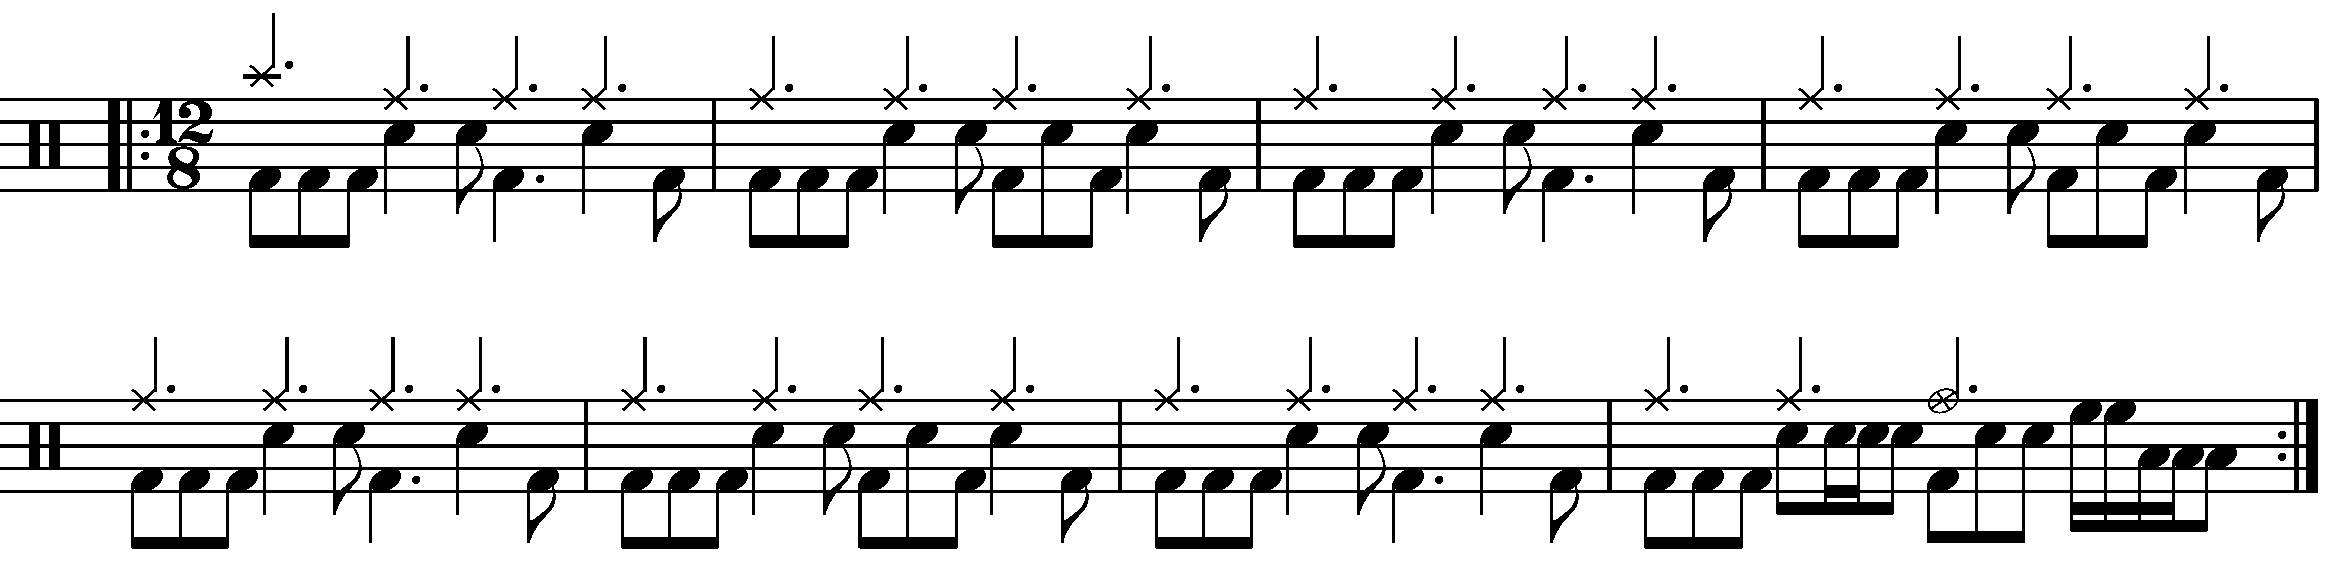 An eight bar phrase built of an AAAB pattern using 2 bar 12/8 grooves